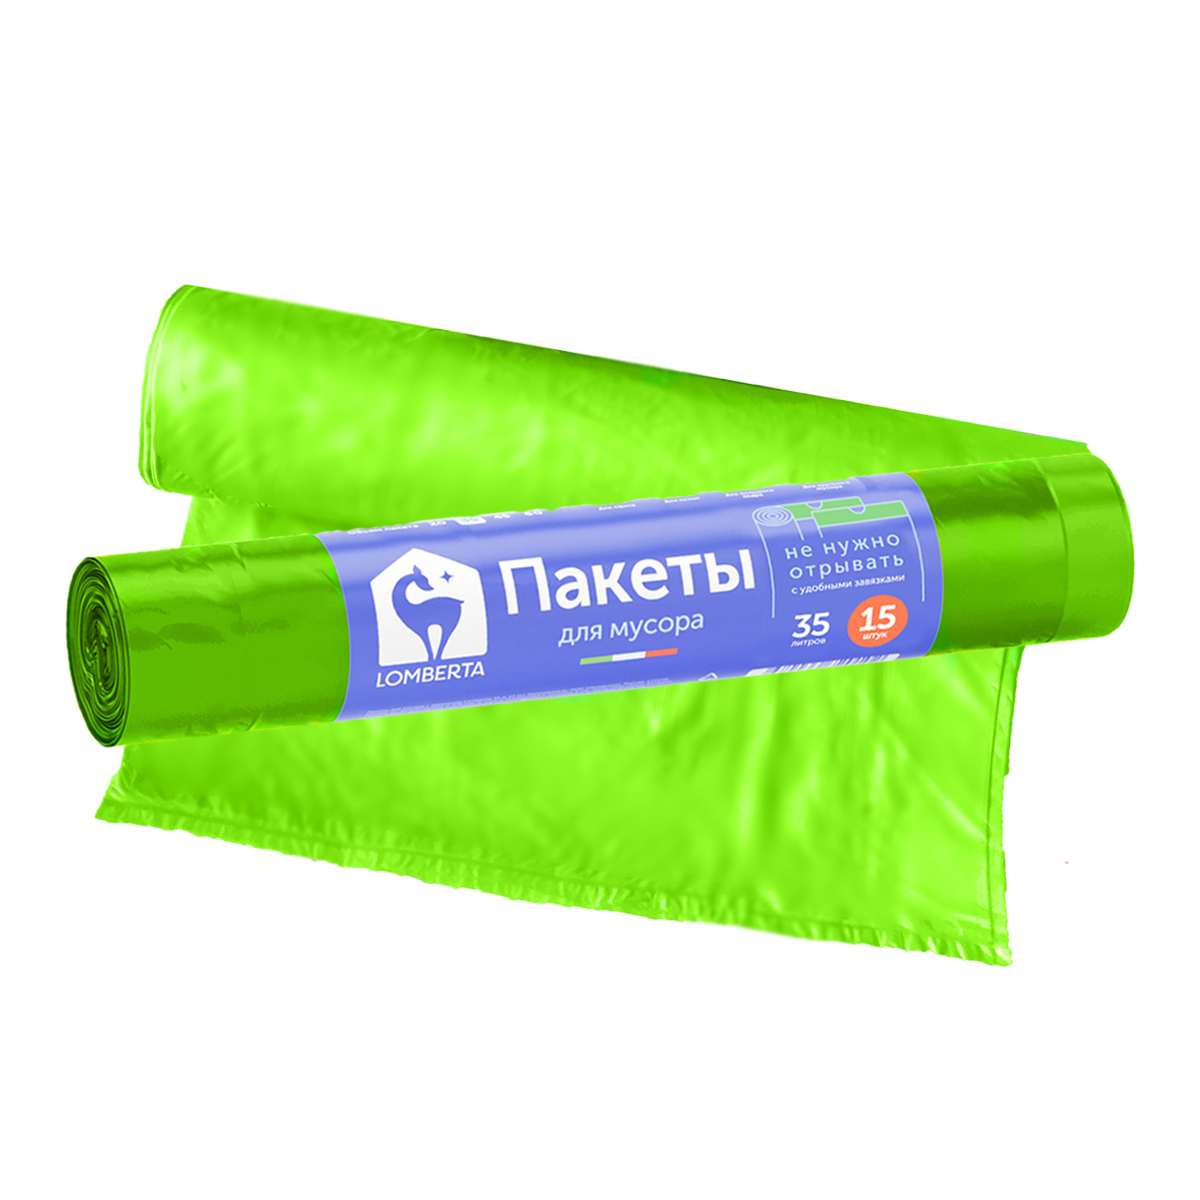 Пакет для мусора Lomberta overlap 15 шт 35 л, цвет зеленый - фото 1